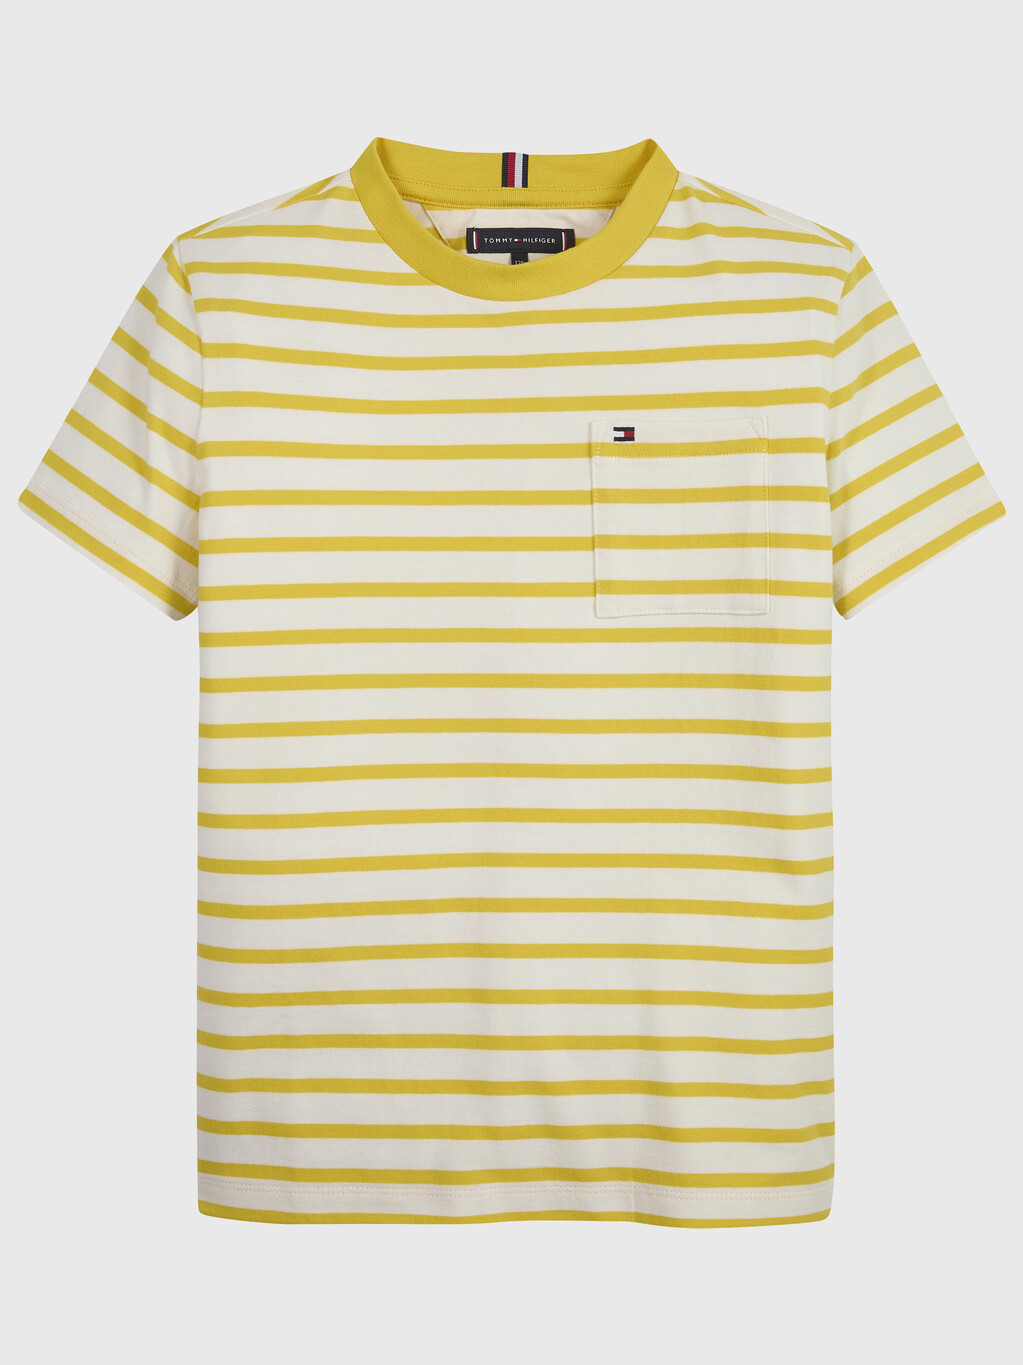 布列塔尼條紋口袋 T 恤, Star Fruit Yellow, hi-res